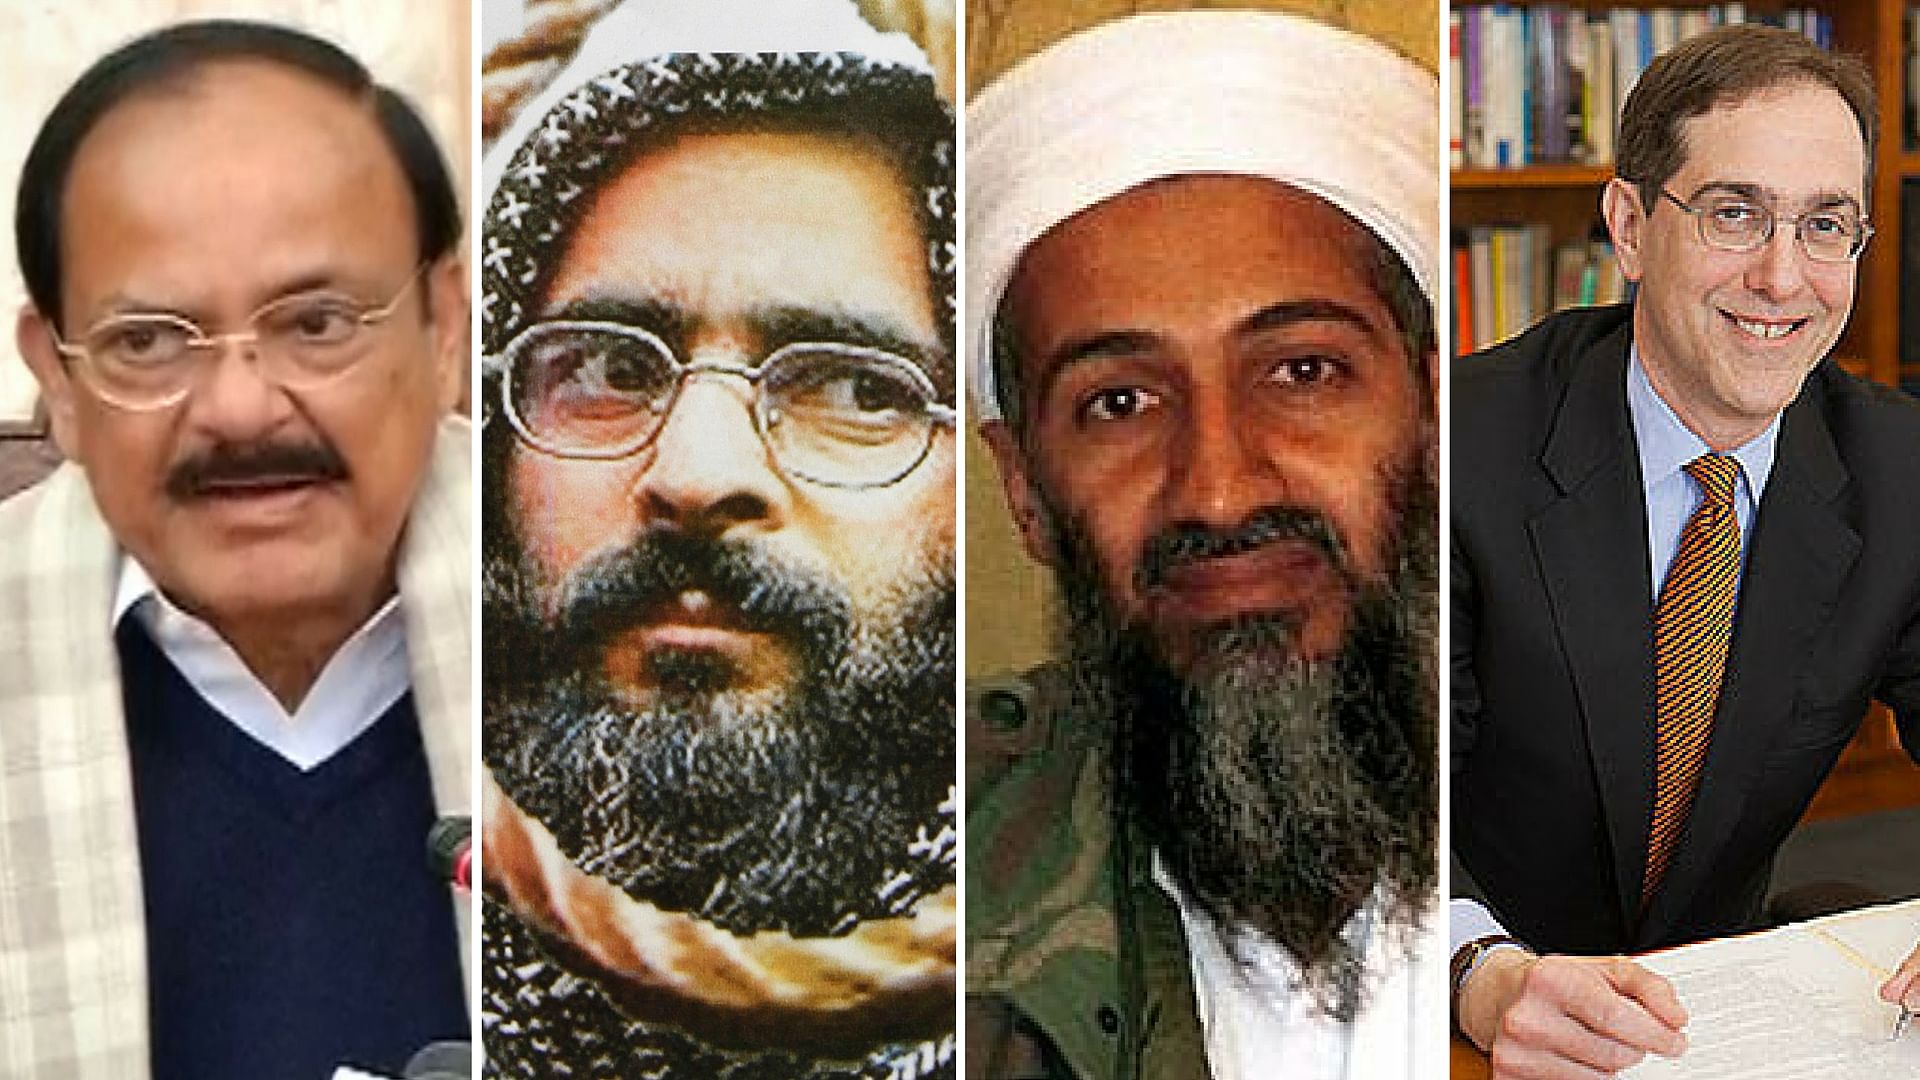 From left to right: Venkaiah Naidu, Afzal Guru, Osama bin Laden and Christopher L Eisgruber. (Photo: ANI/Reuters/AP/<a href="http://www.princeton.edu/president/eisgruber/who/eisgruber/">Princeton University</a>)